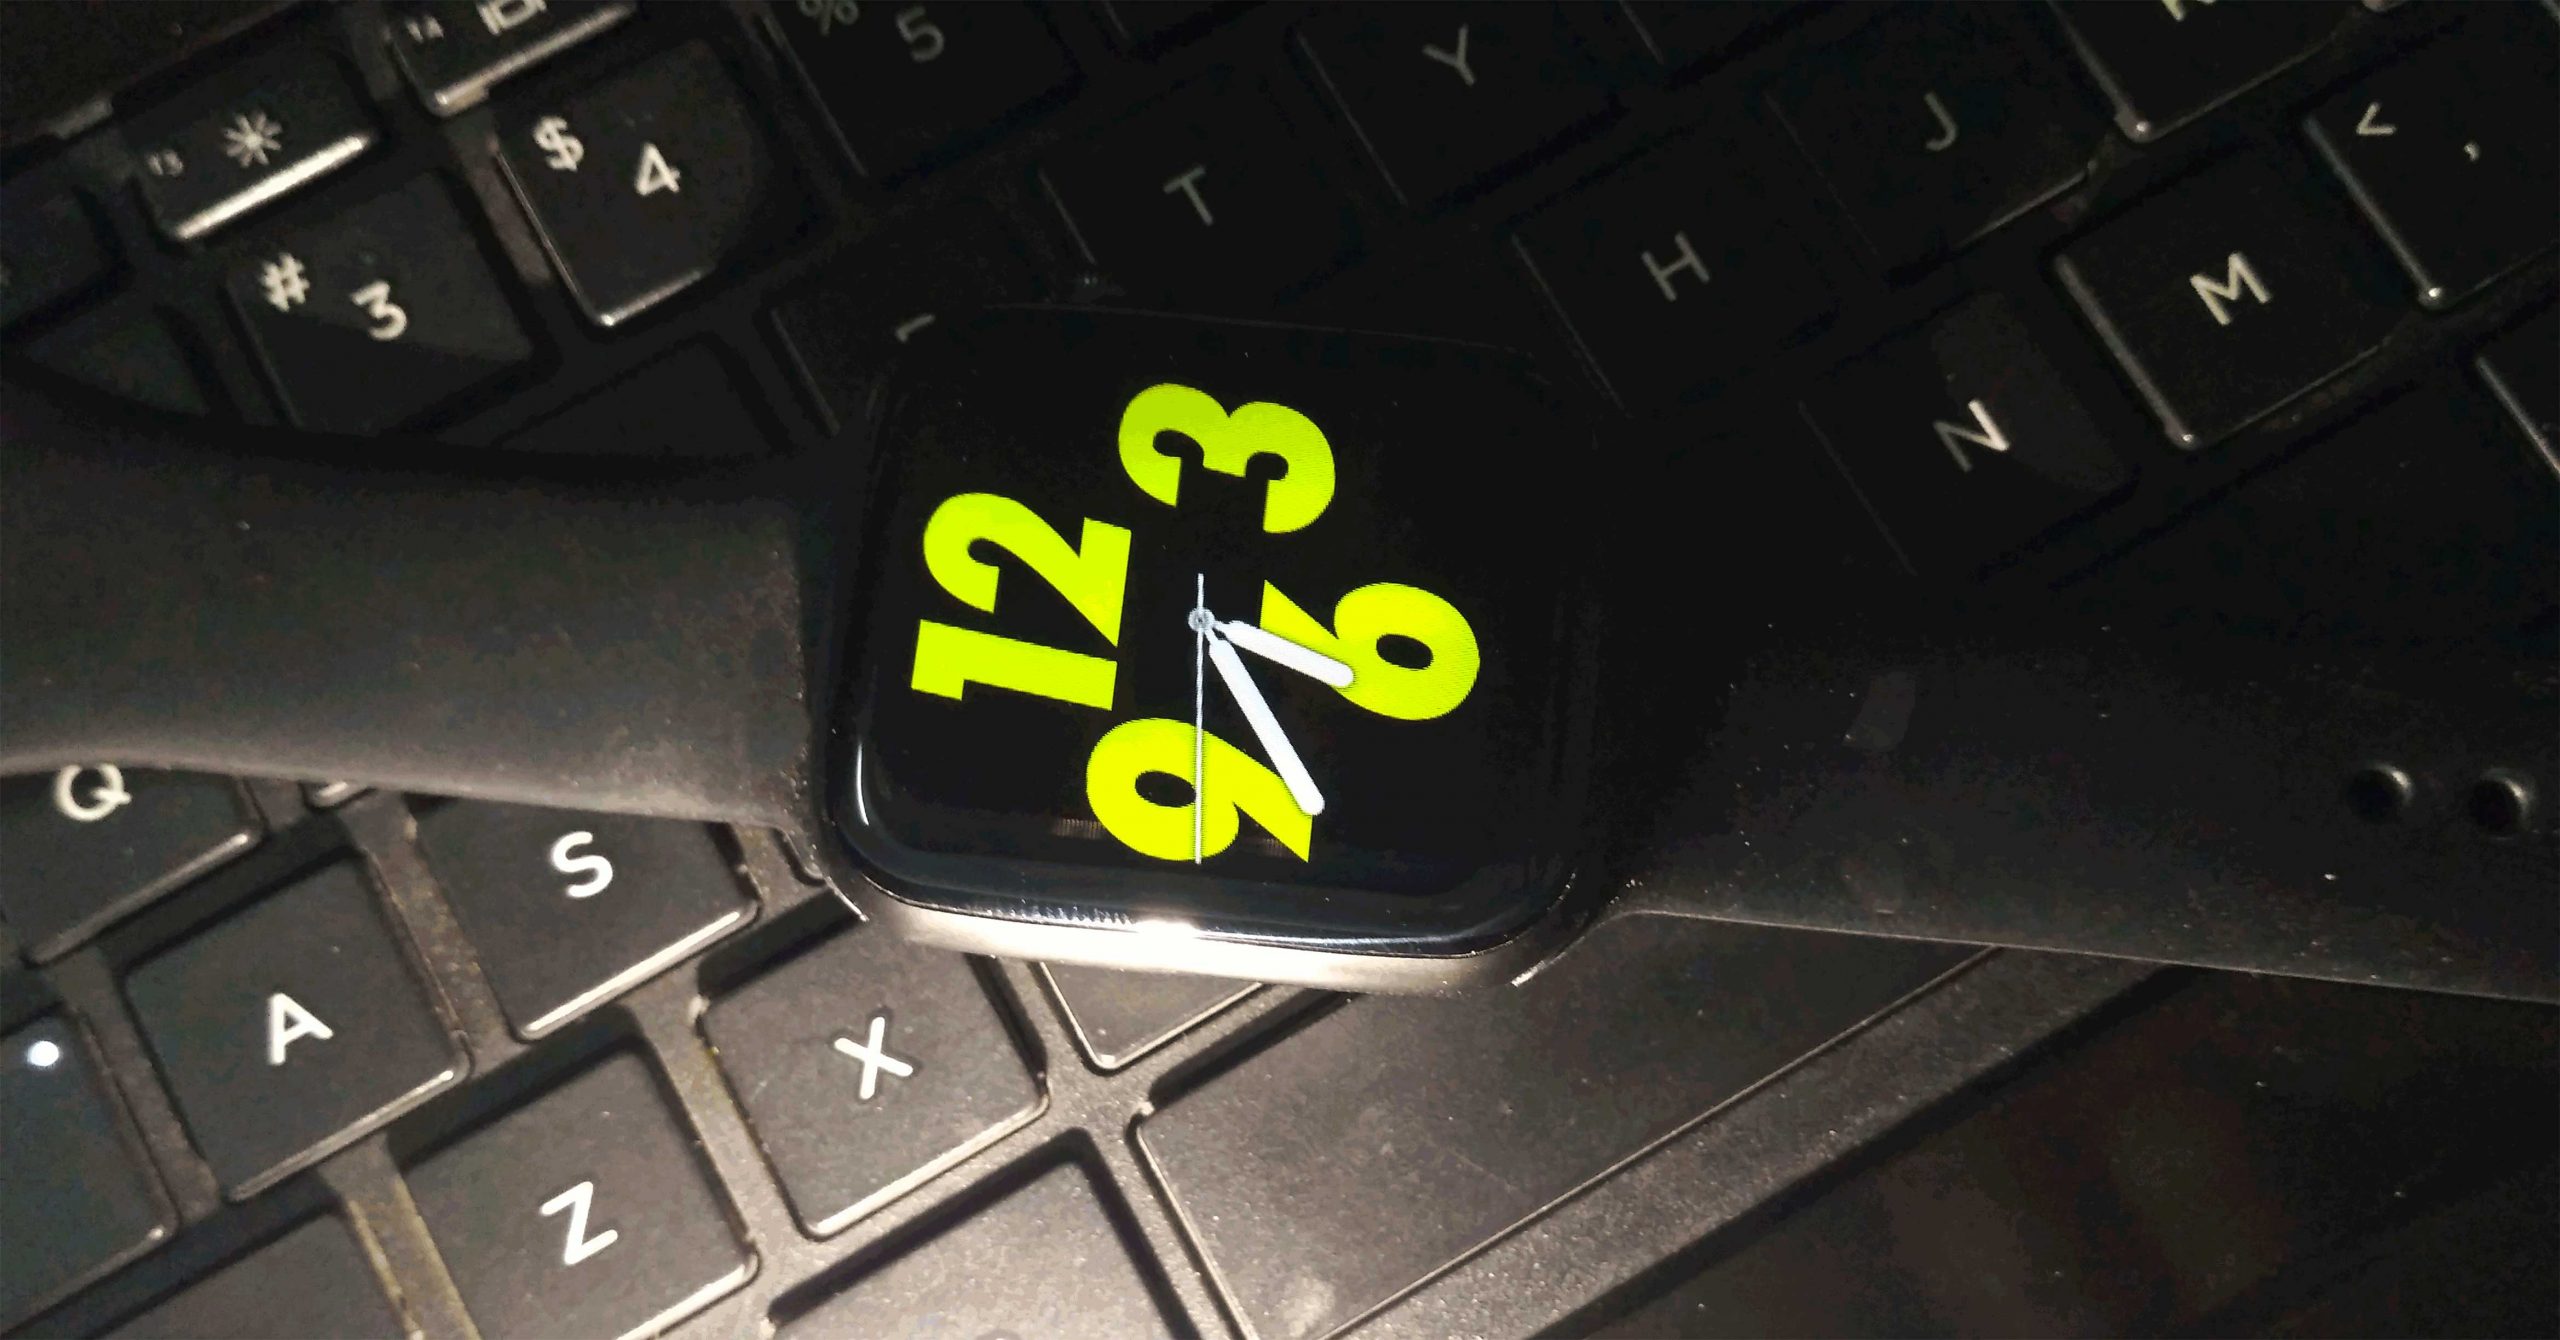 black smart watch placed on a keyboard